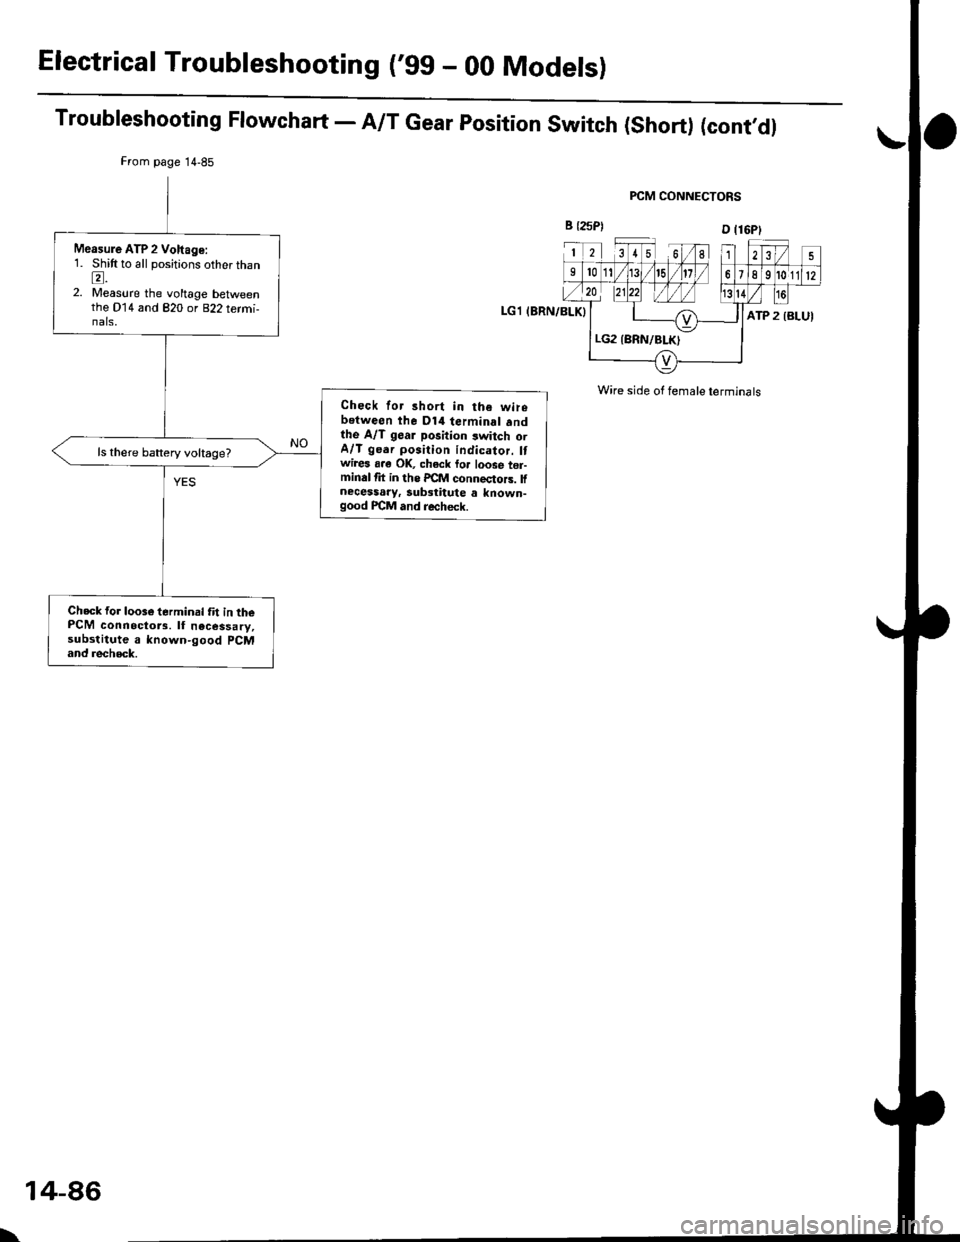 HONDA CIVIC 1997 6.G Workshop Manual ElectricalTroubleshooting (gg - 00 Models)
Troubleshooting Flowchart - A/T Gear position Switch (Short) (cont,dl
LGl (BRN/BLK}
FCM CONNECTORS
B {25P)D l16Pl
12[Ll81235
9101/113/ 151/)11789t0112,/ 20
